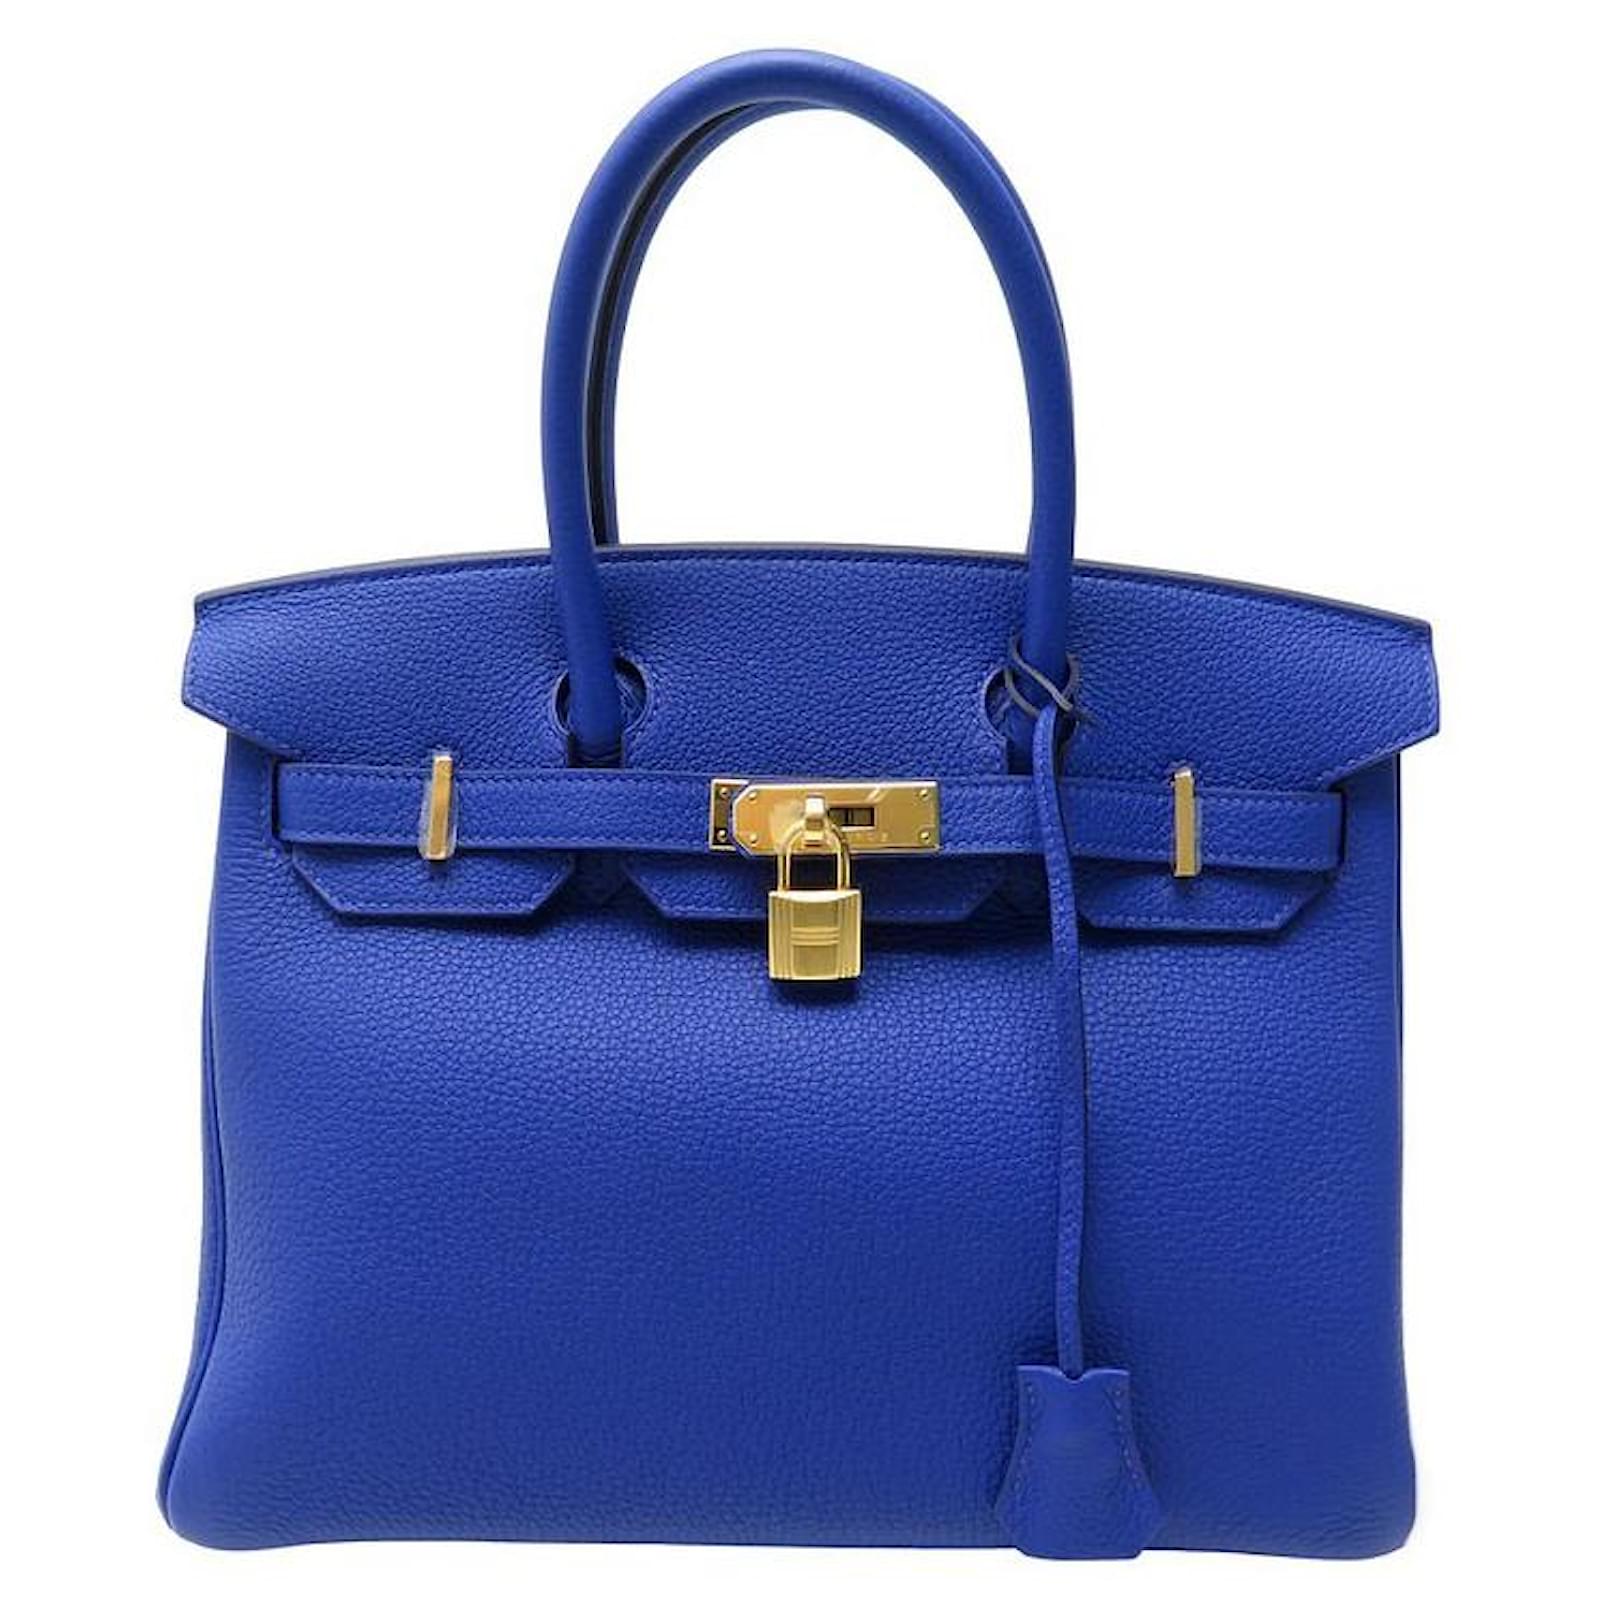 Royal Blue Leather Handbag | ShopStyle